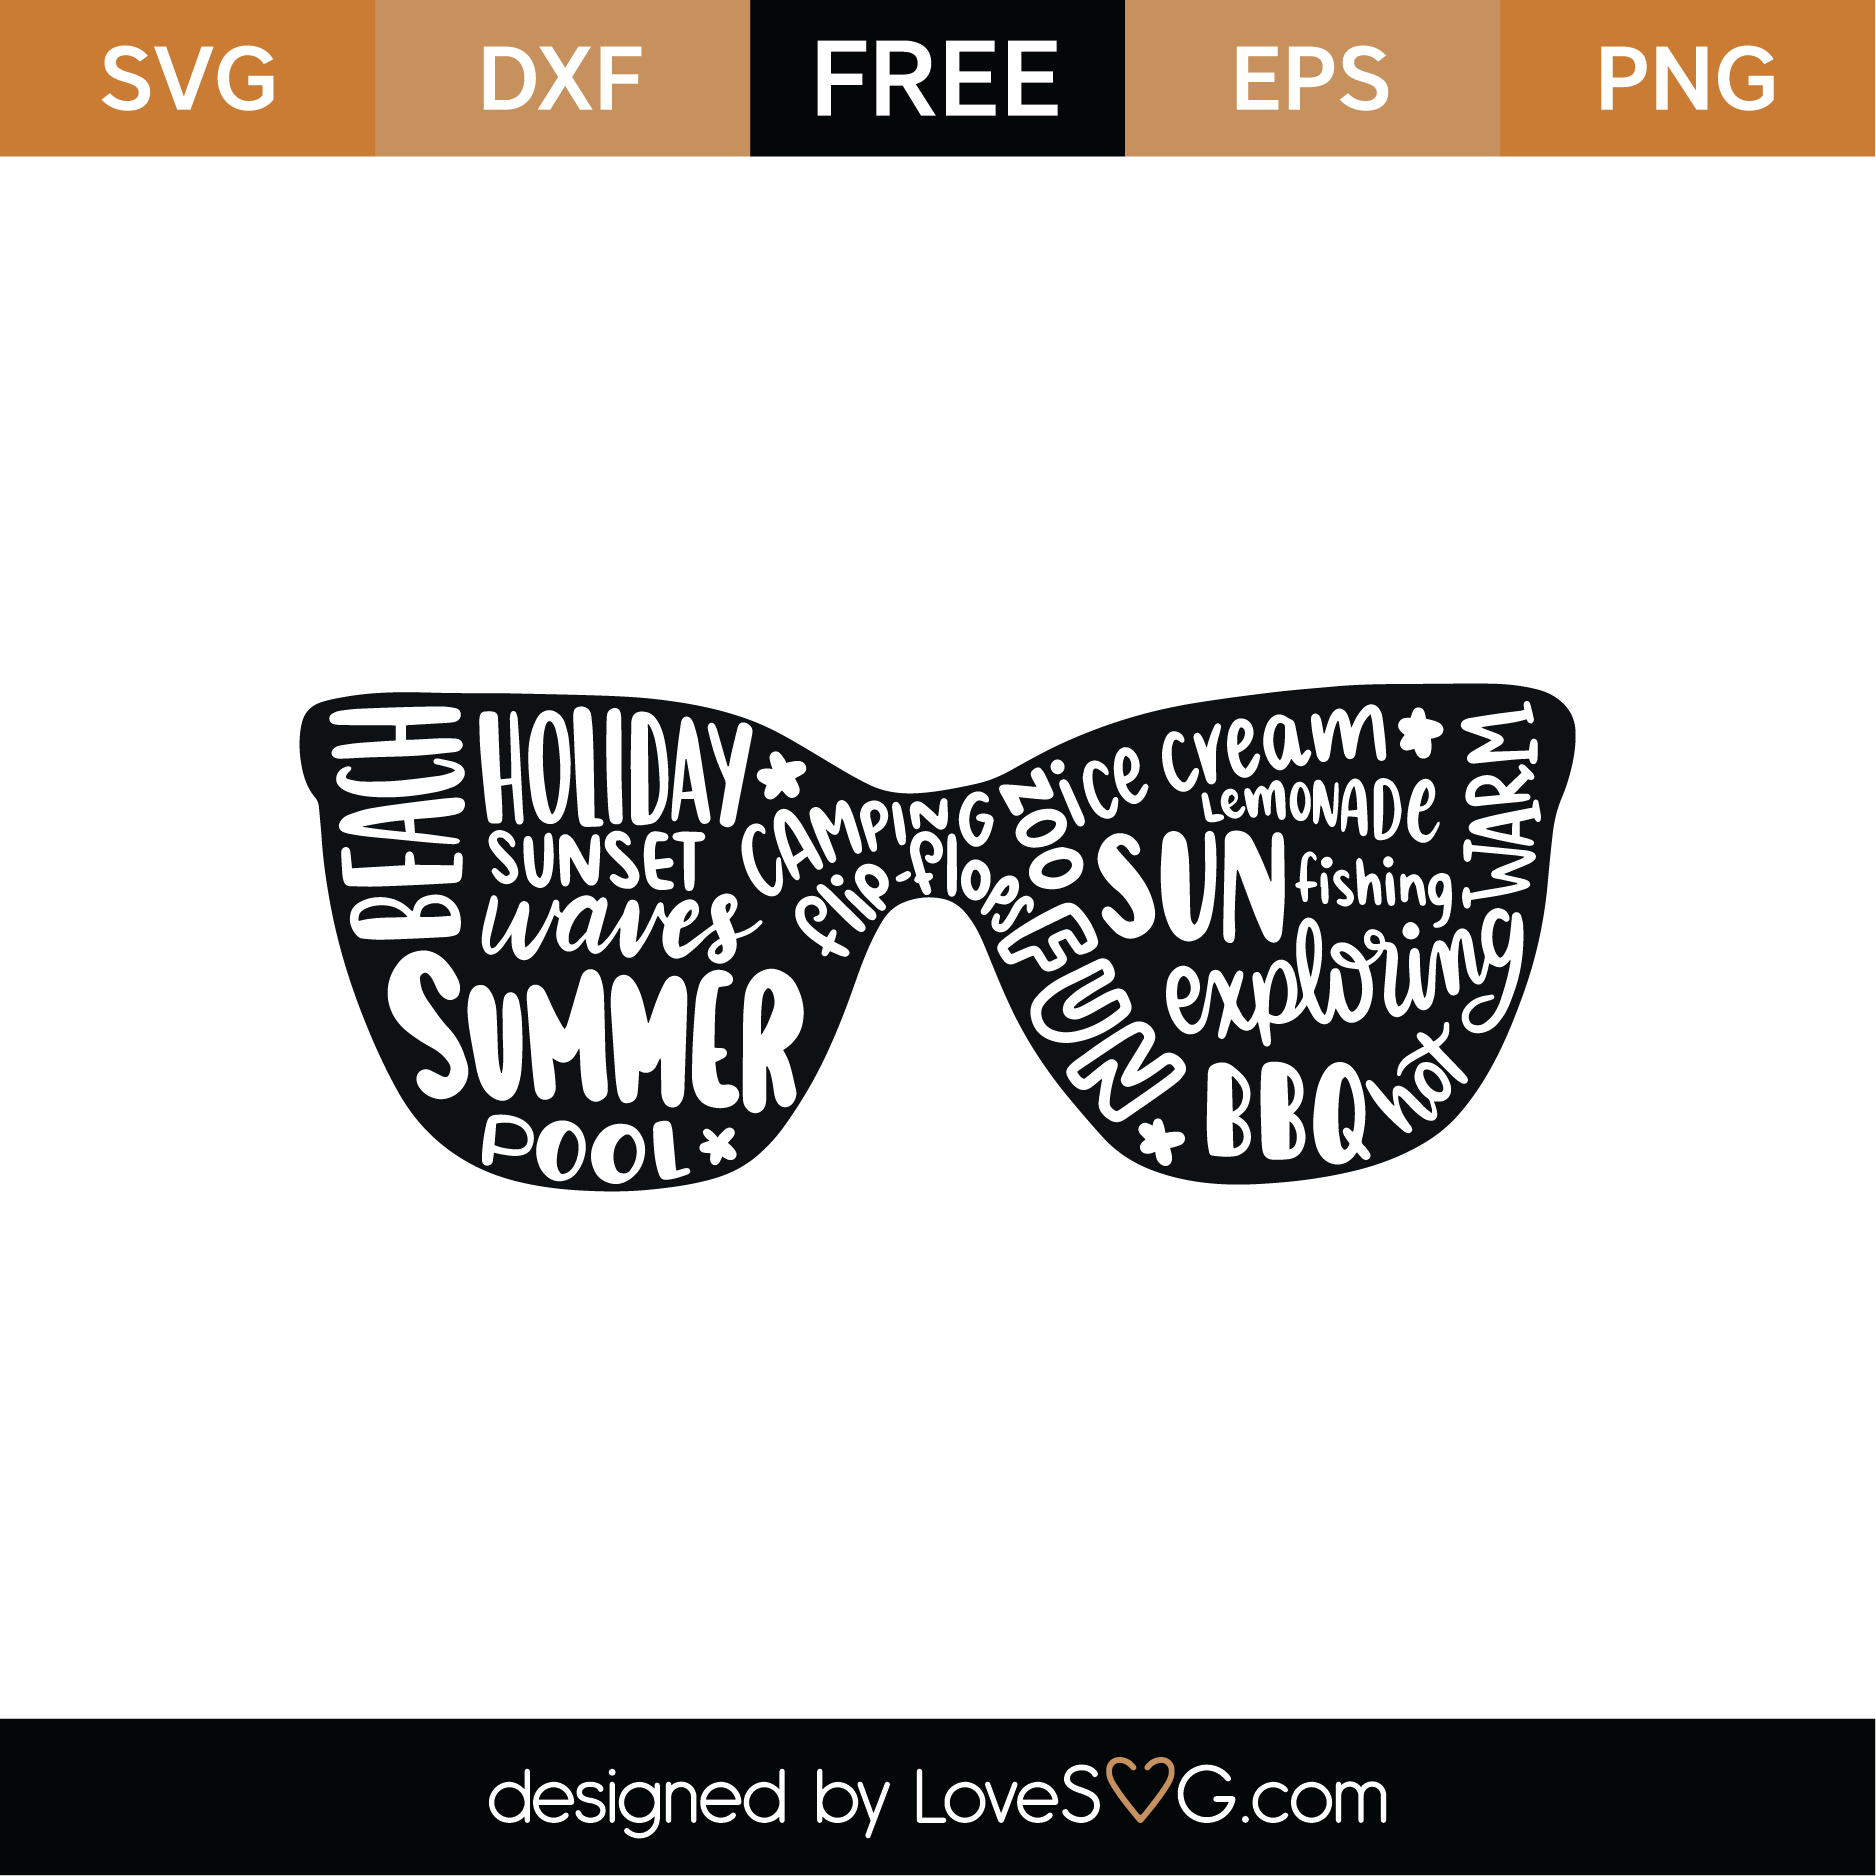 Free Sunglasses SVG Cut File | Lovesvg.com